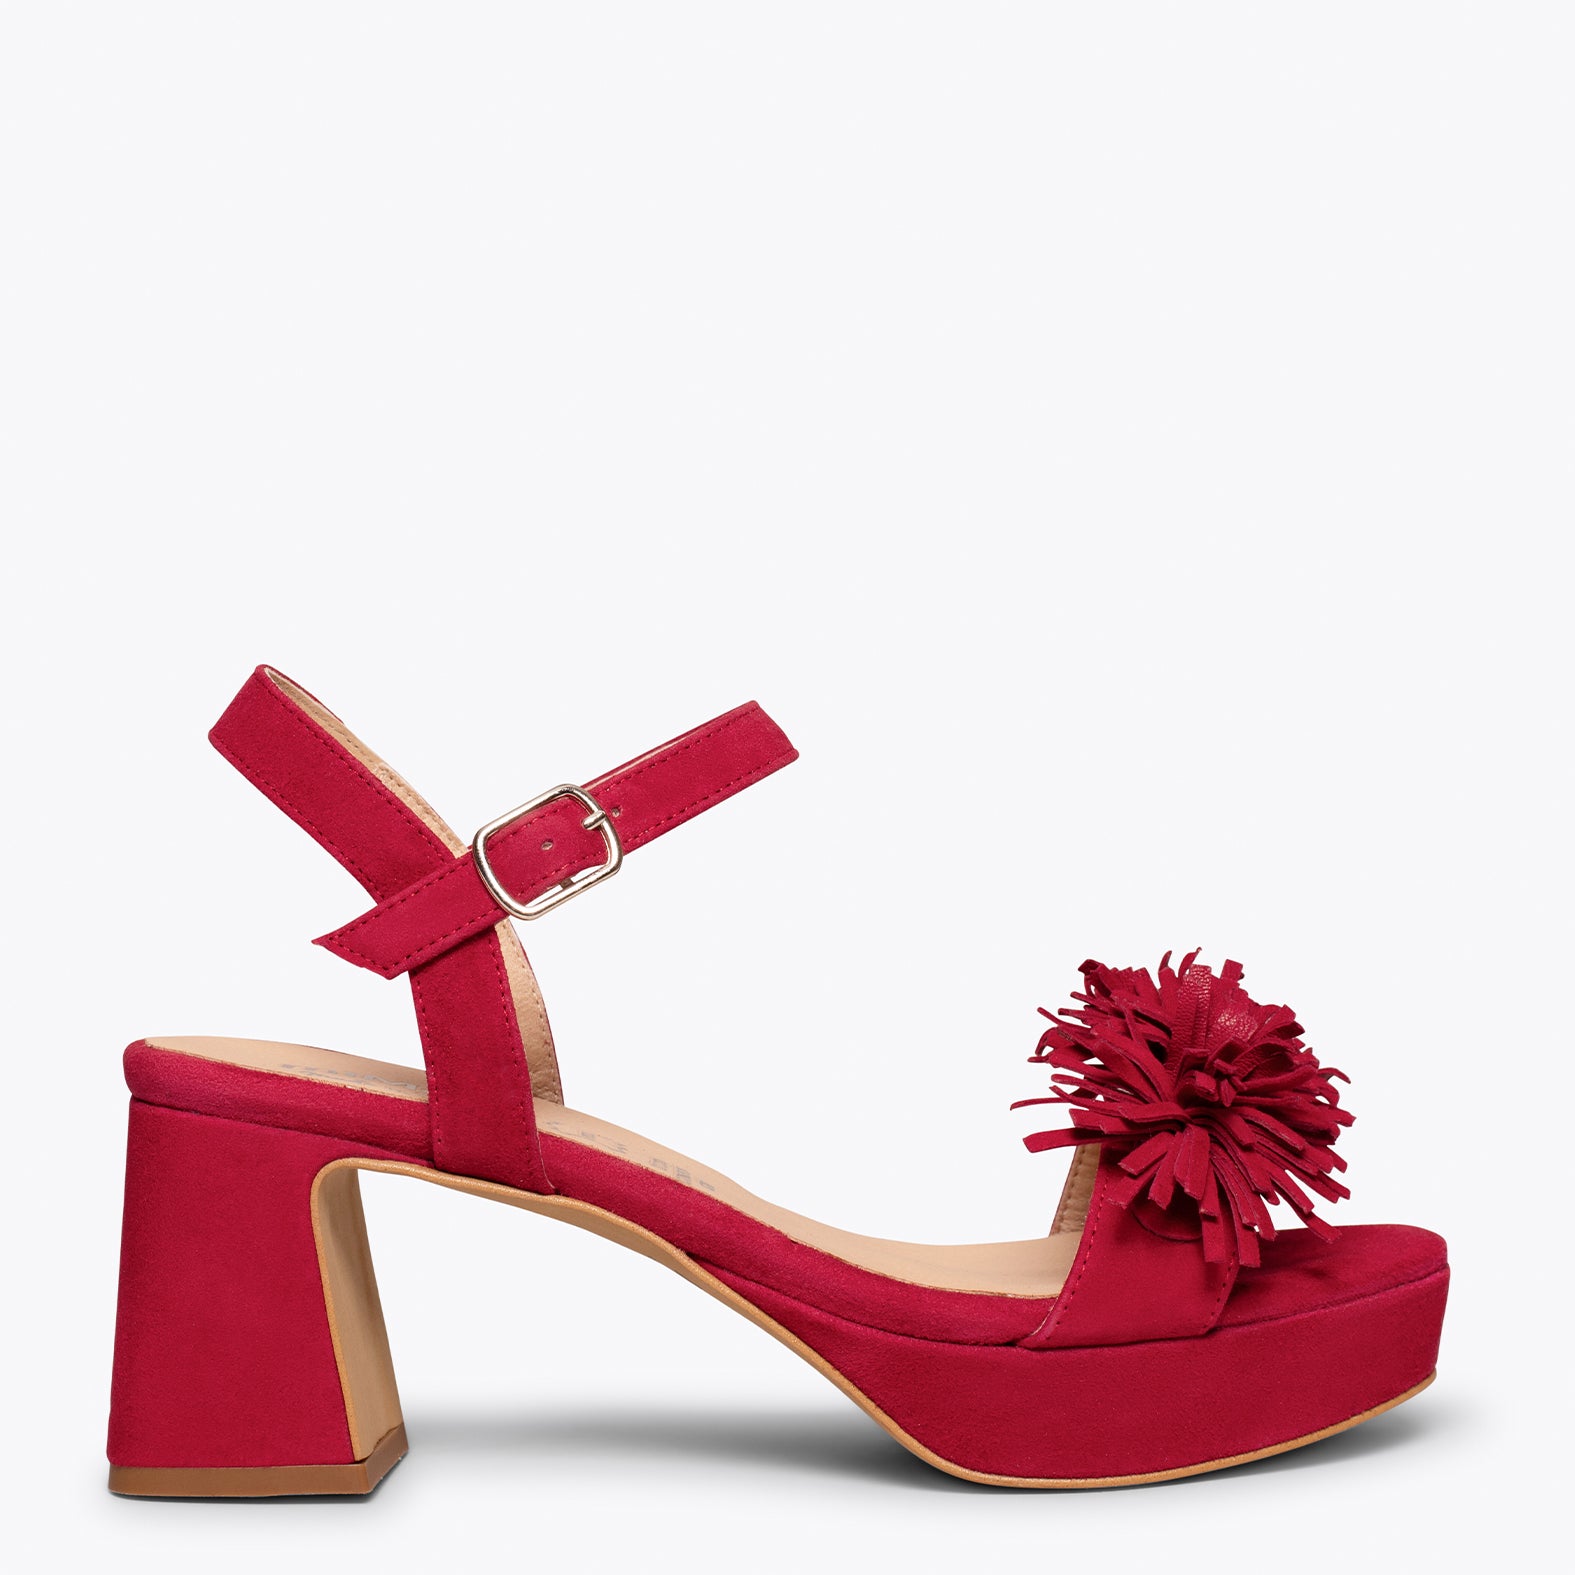 POMPOM – RED mid heel sandals with fringes